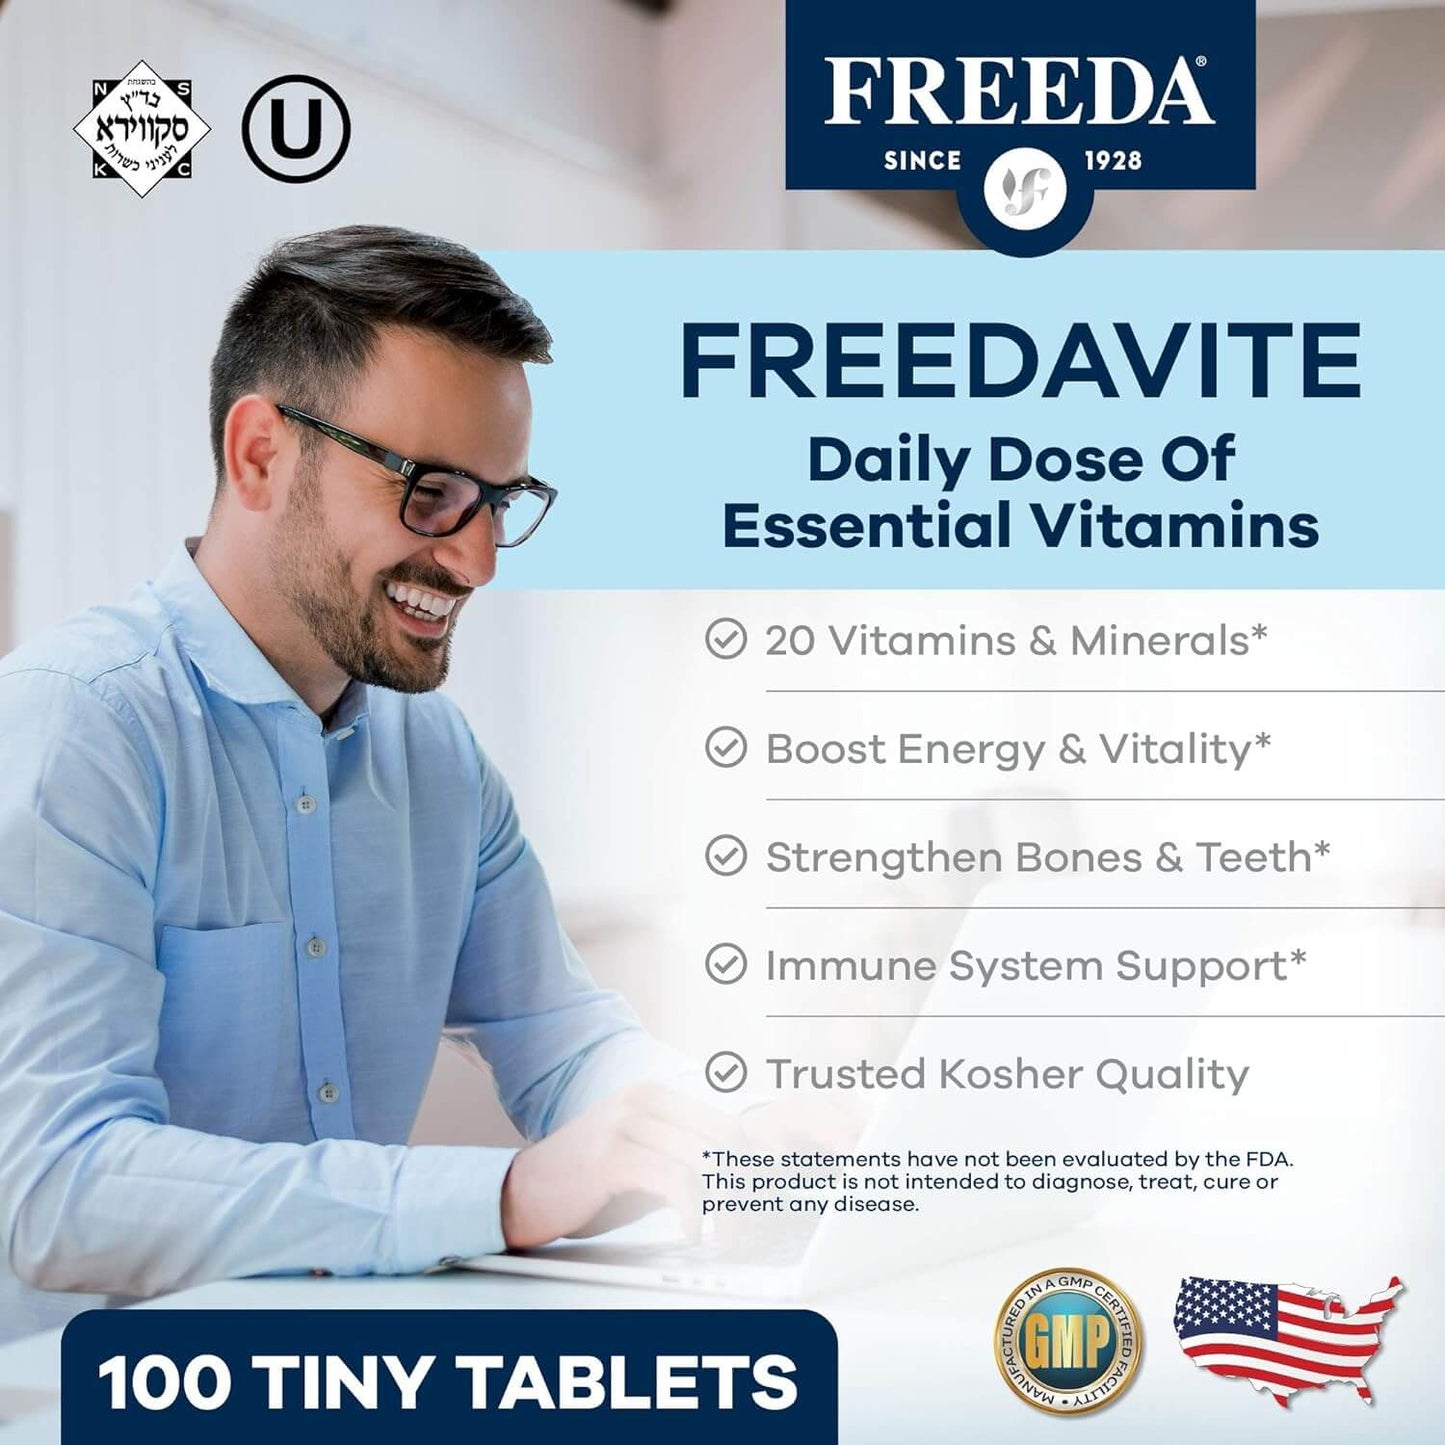 Freedavite - Daily Multivitamin